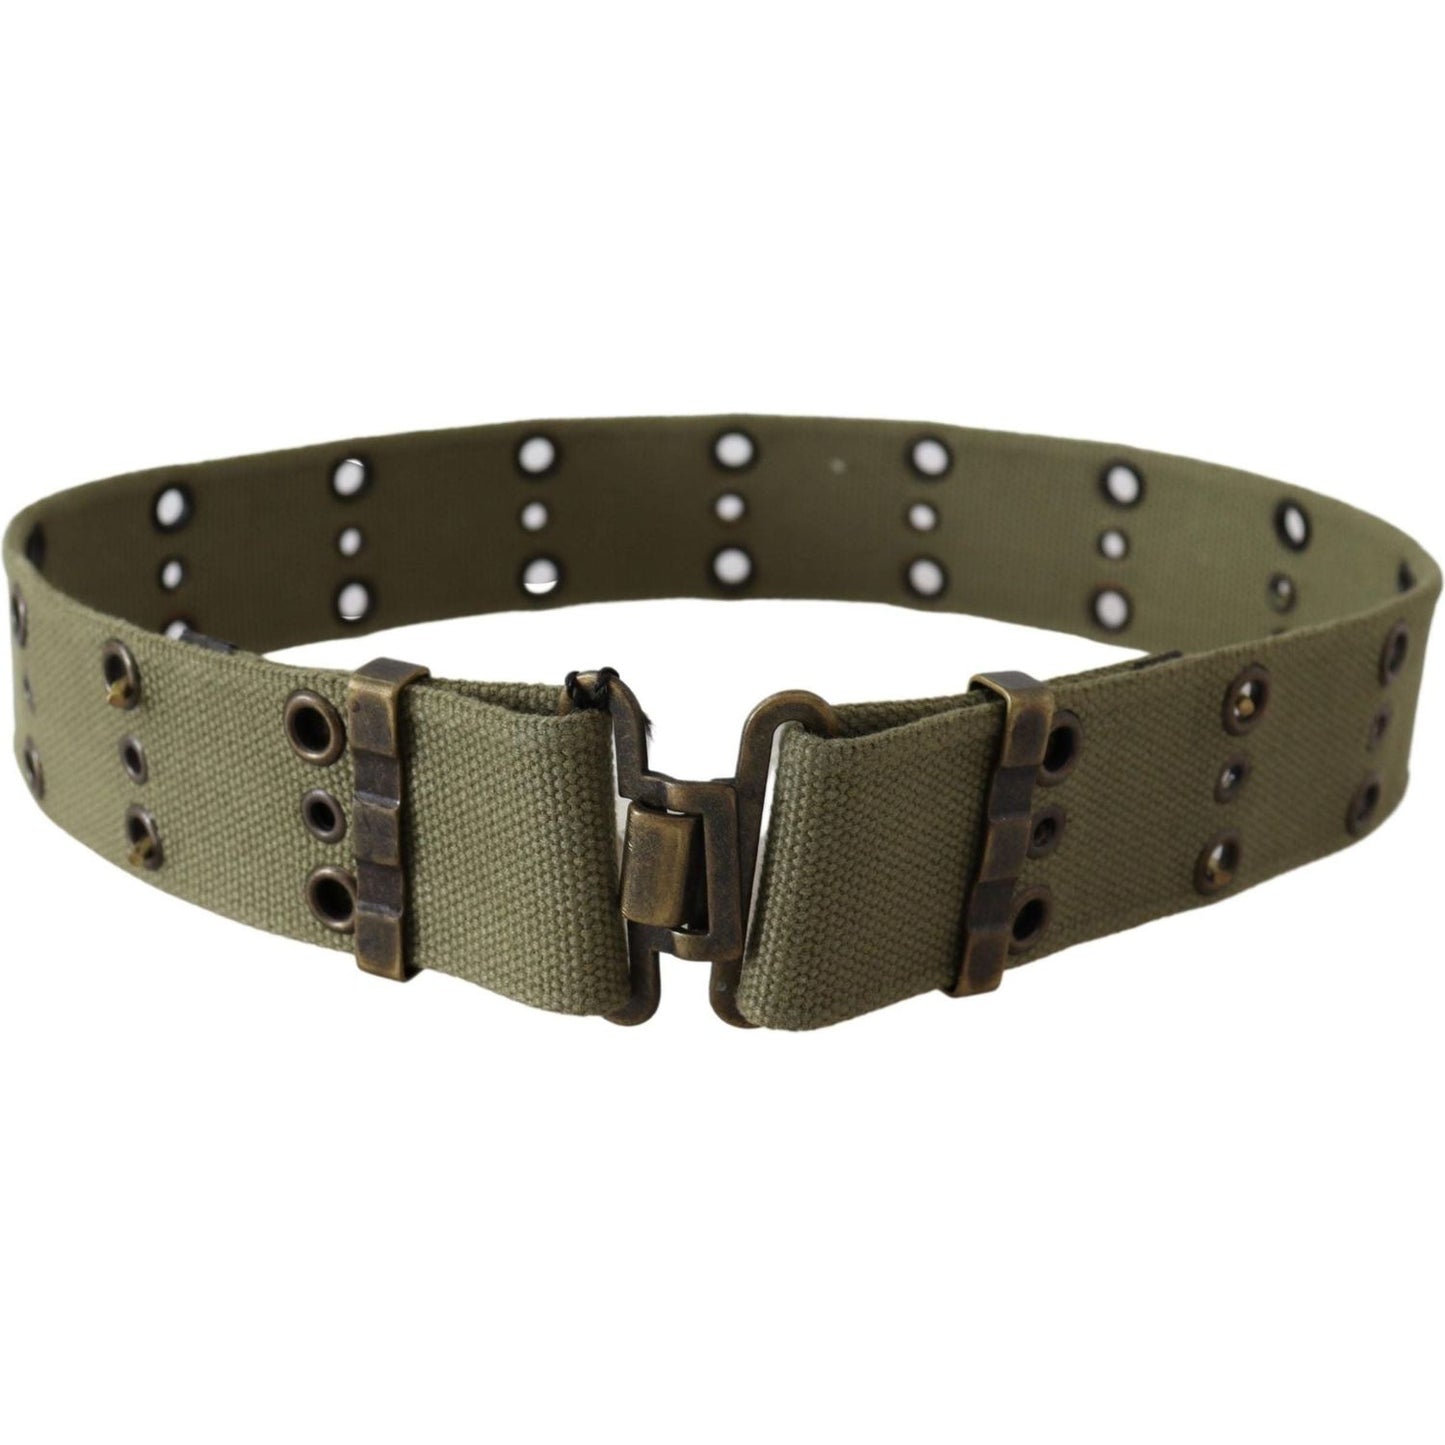 Ermanno Scervino Chic Army Green Cotton Waist Belt green-100-cotton-rustic-bronze-buckle-belt Belt IMG_0835-scaled-4b5b4a87-d21.jpg